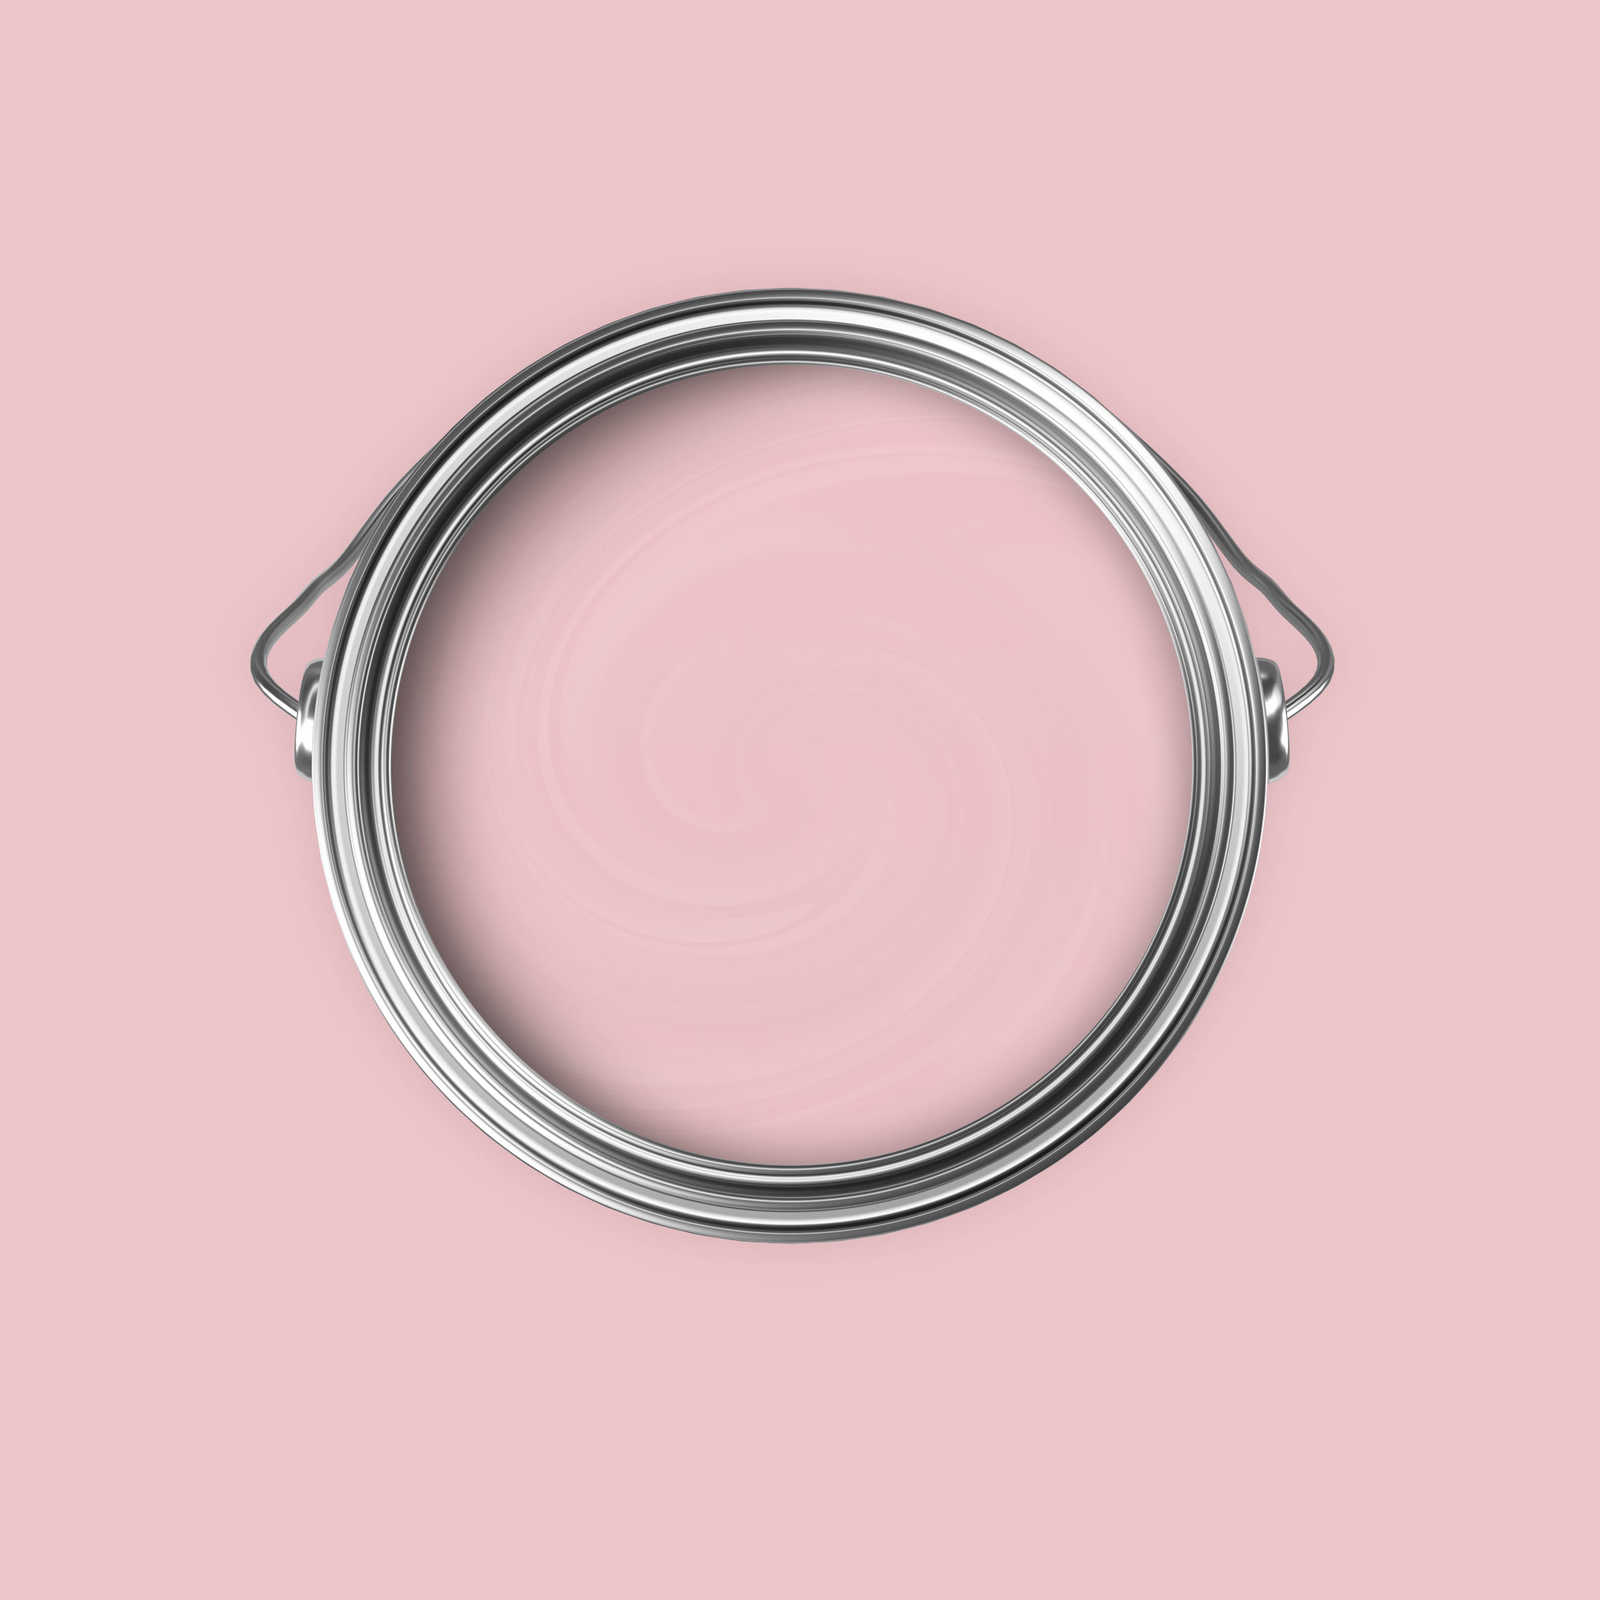             Pittura murale Premium rosa tenue »Blooming Blossom« NW1016 – 5 litri
        